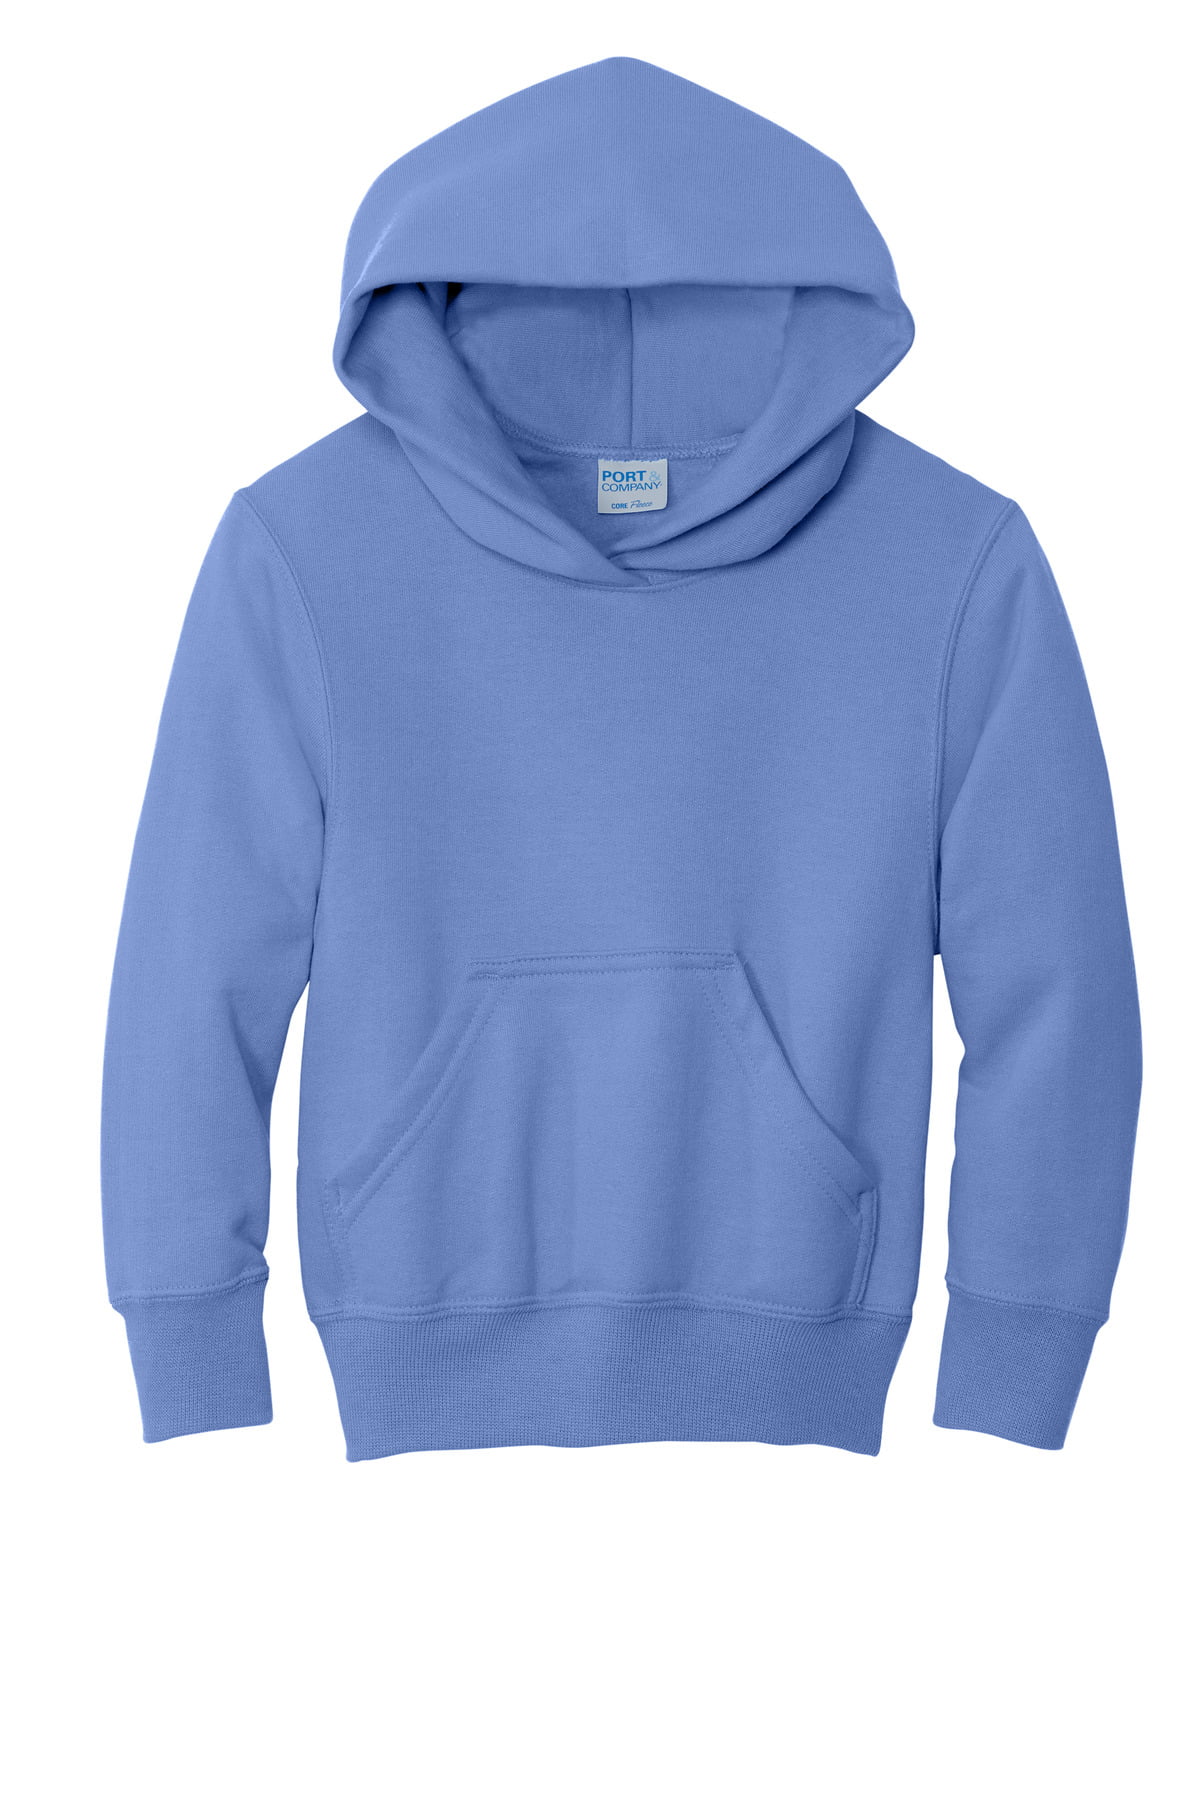 & Hooded Port Sweatshirt-L (Carolina Core Pullover Youth Blue) Fleece Company